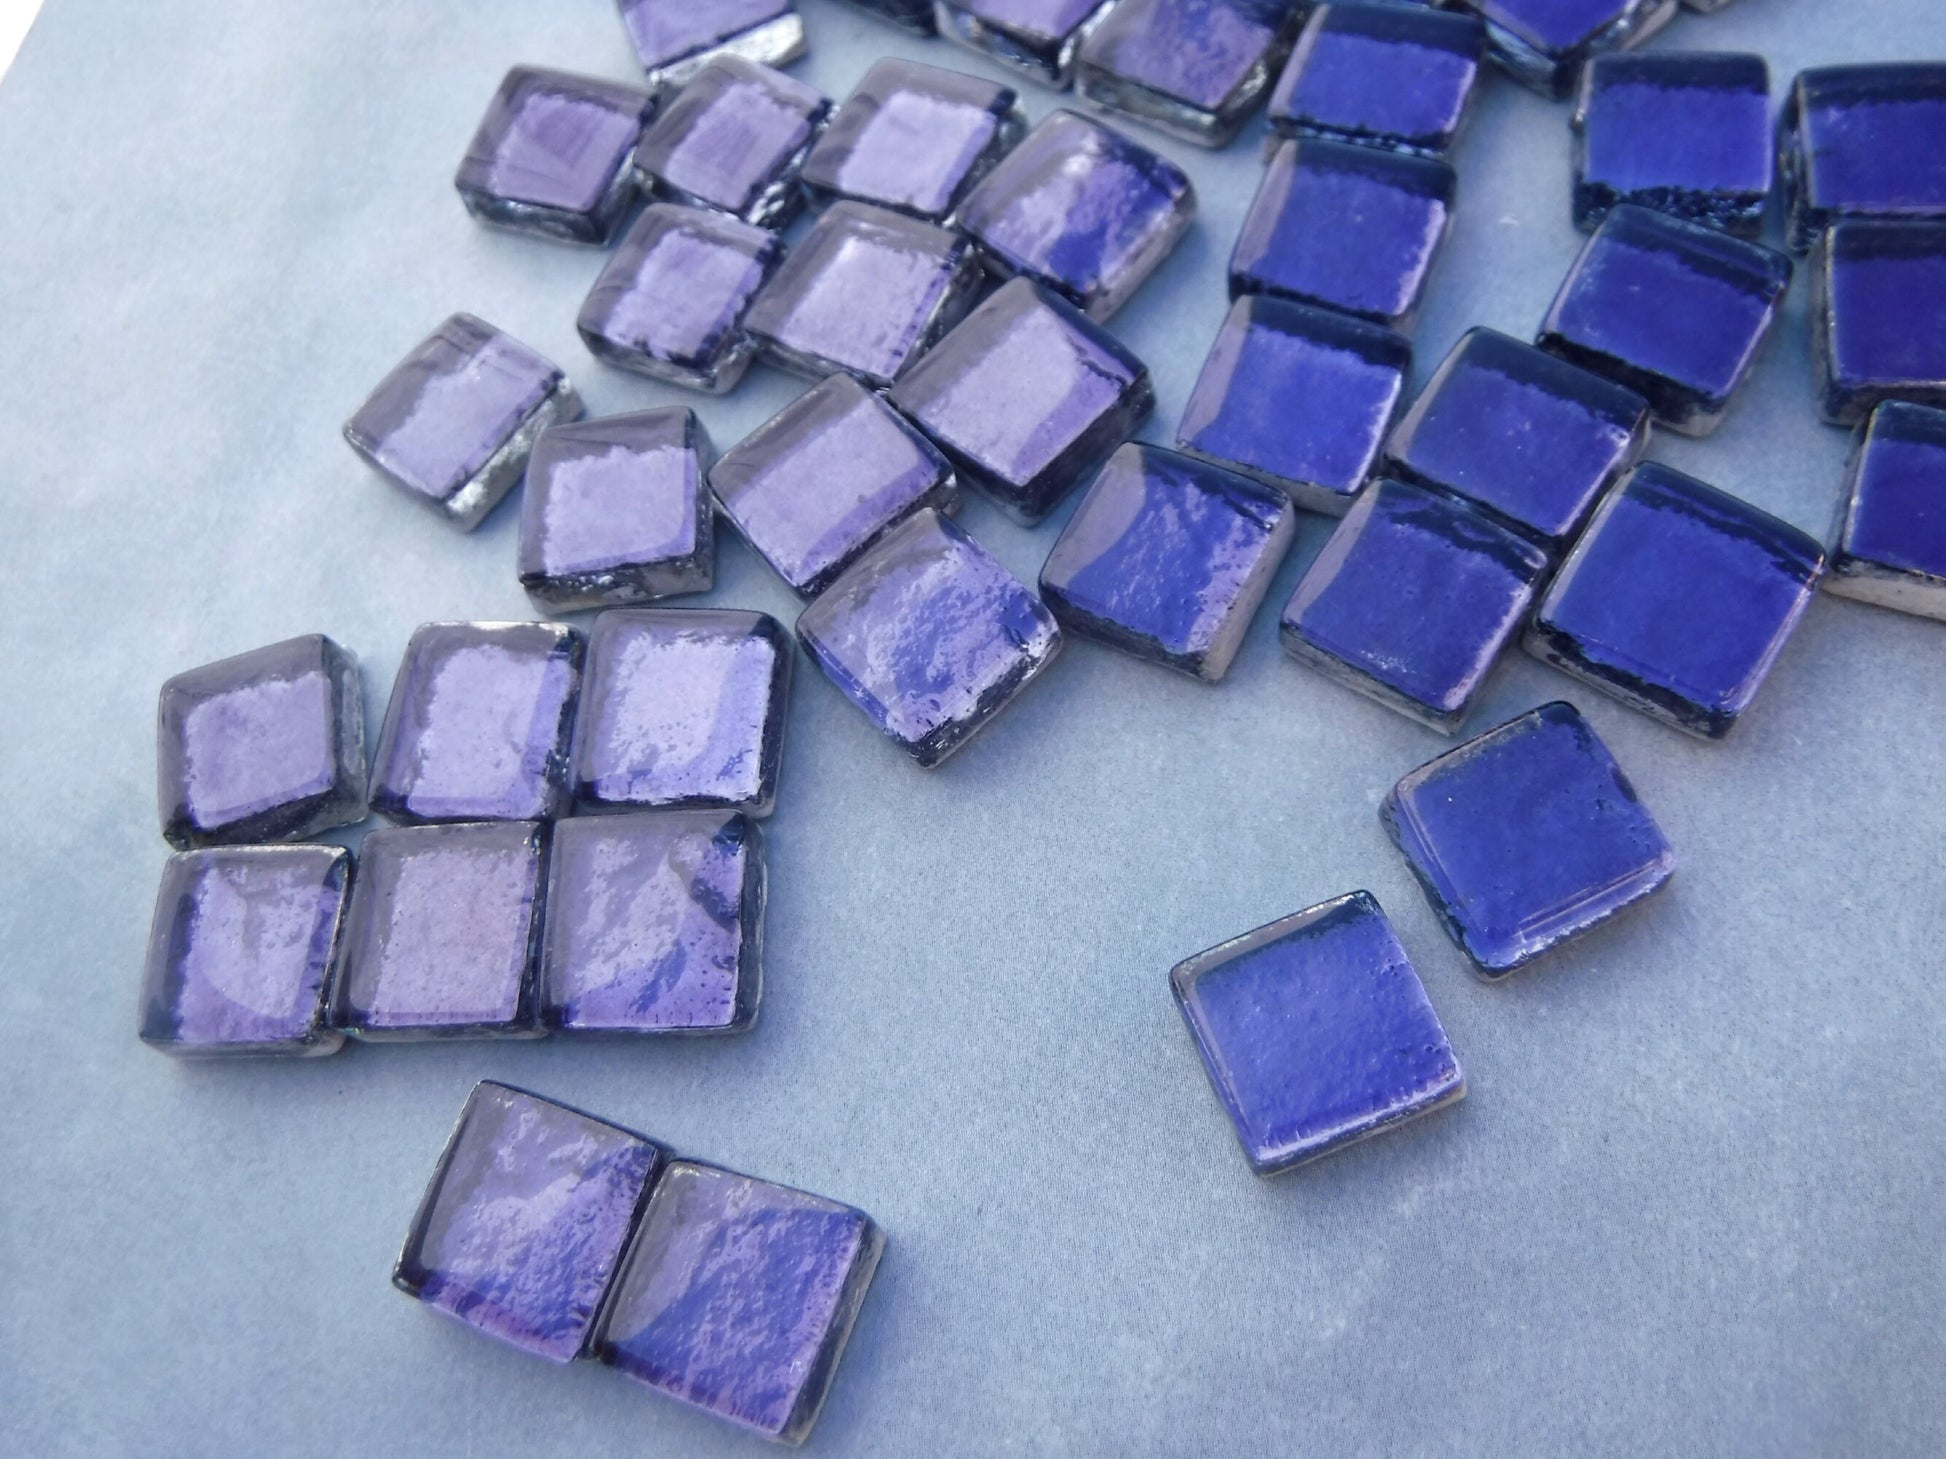 Darkest Indigo Foil Square Crystal Tiles - 12mm - 50g Anil Blue Metallic Glass Tiles